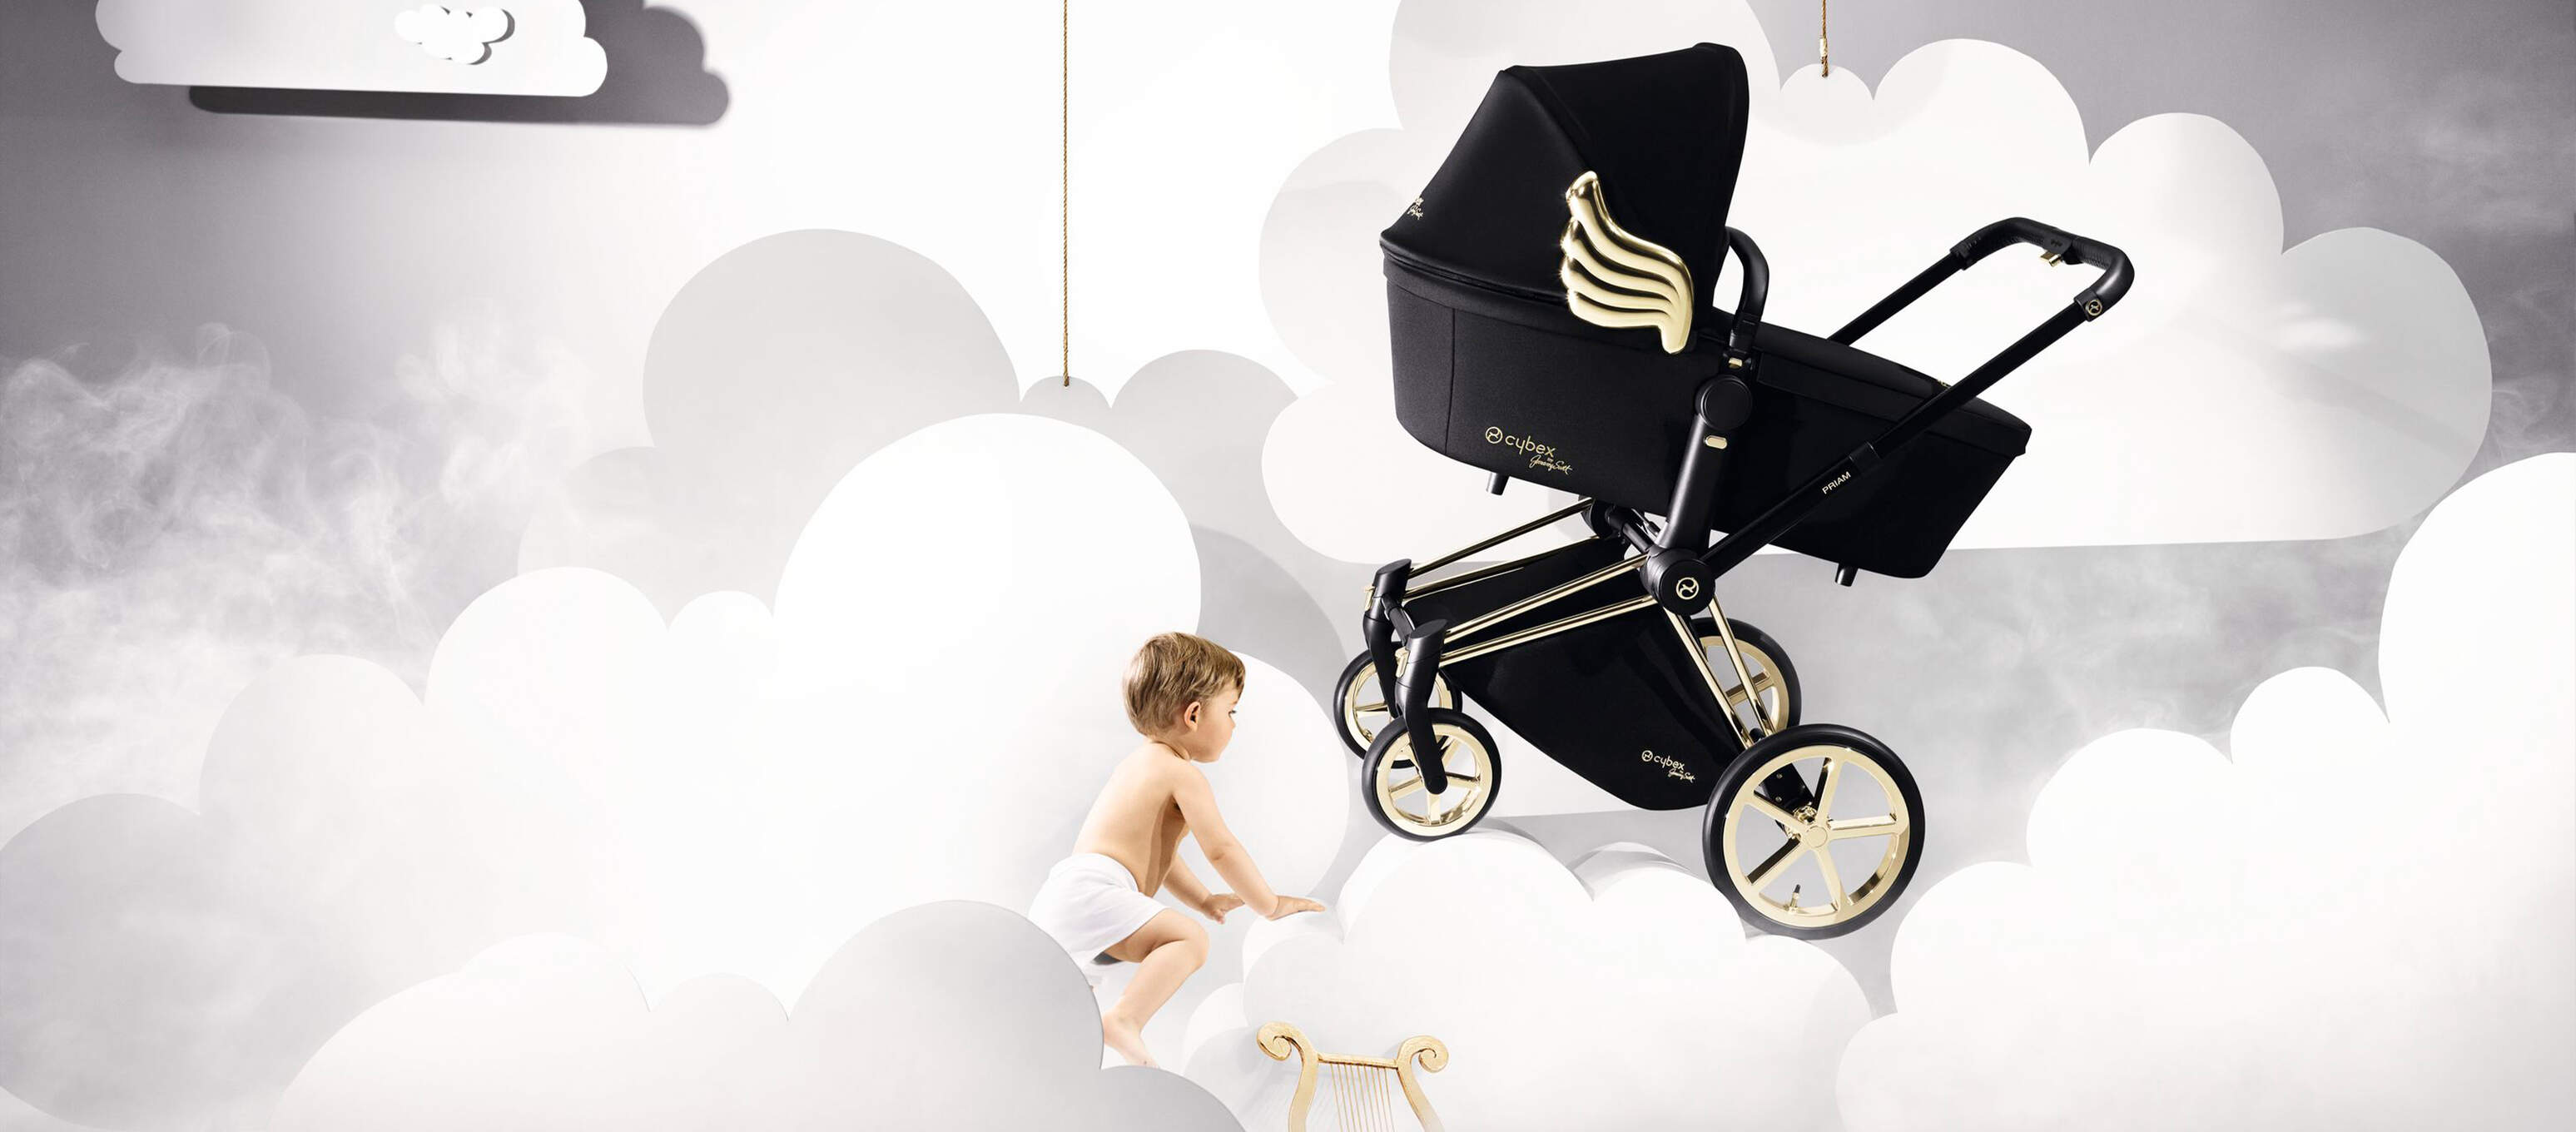 Cybex by Jeremy Scott Wings Kollektion Kinderwagen und Baby Bild